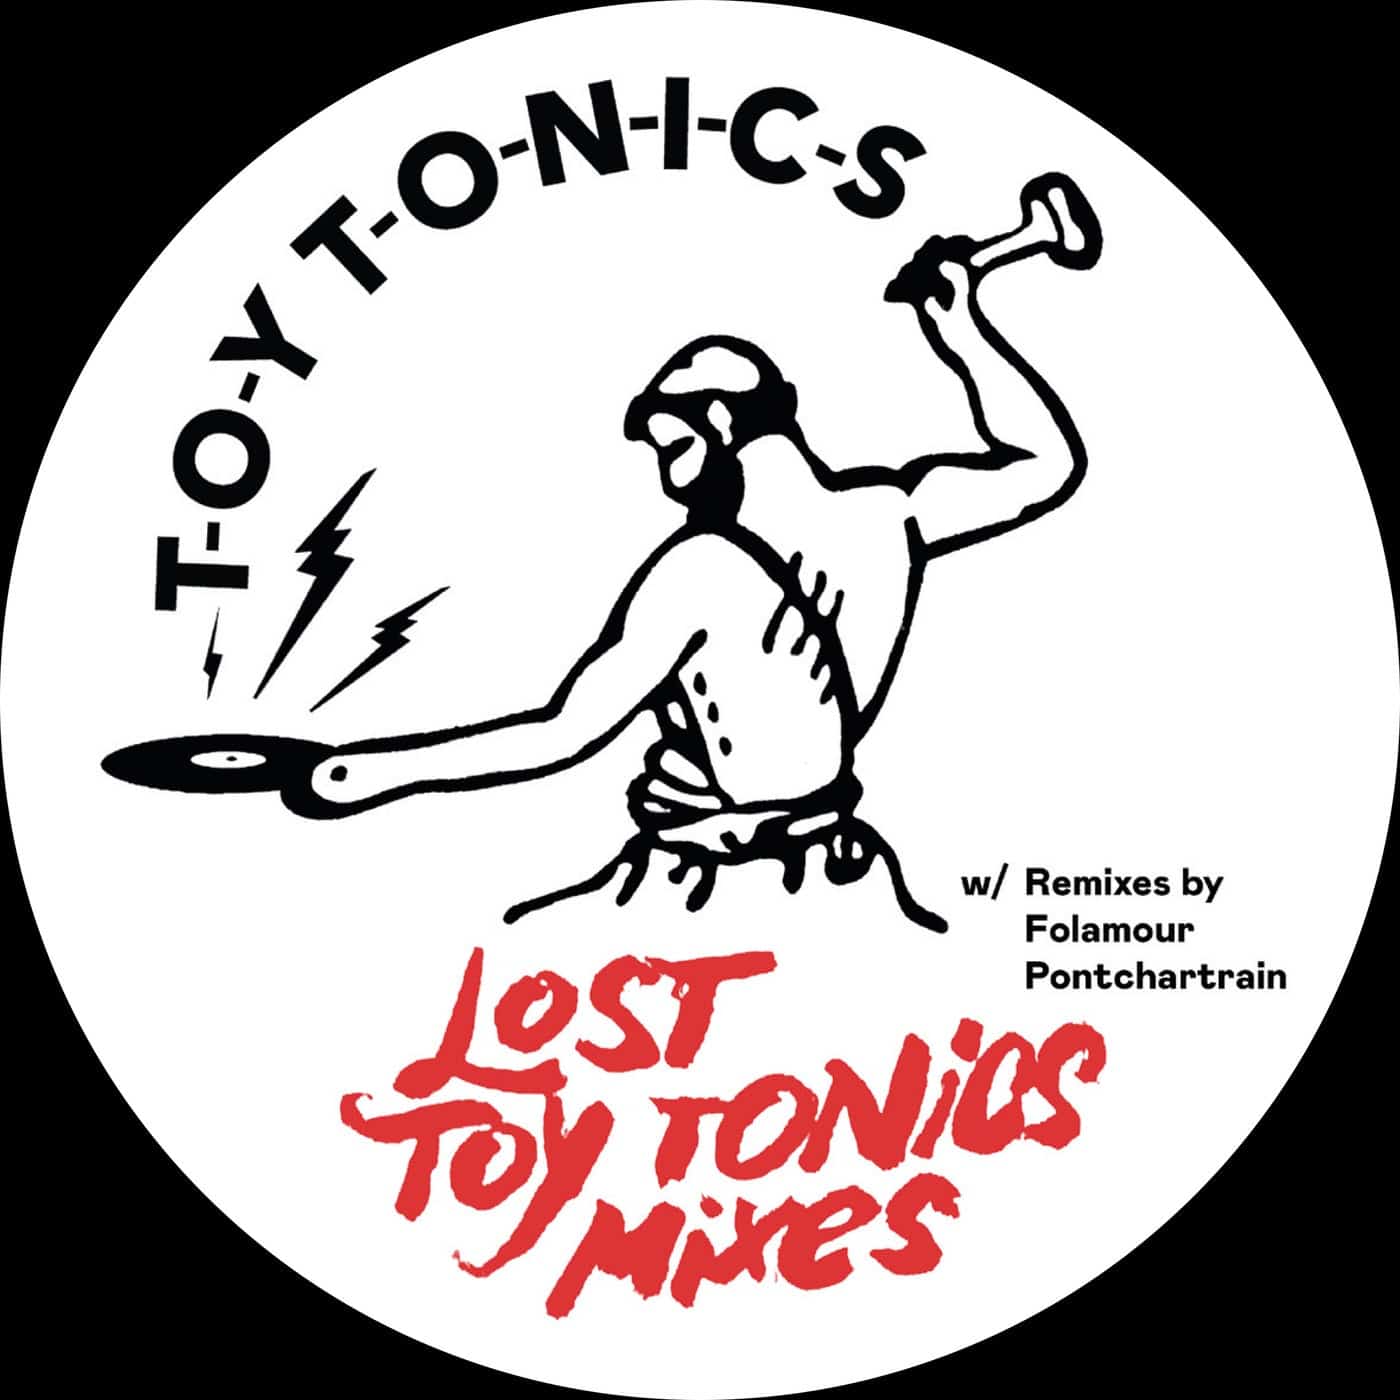 image cover: MangaBey, Felipe Gordon, Demuja, Sano, Kapote - Lost Toy Tonics Mixes / TOYT131